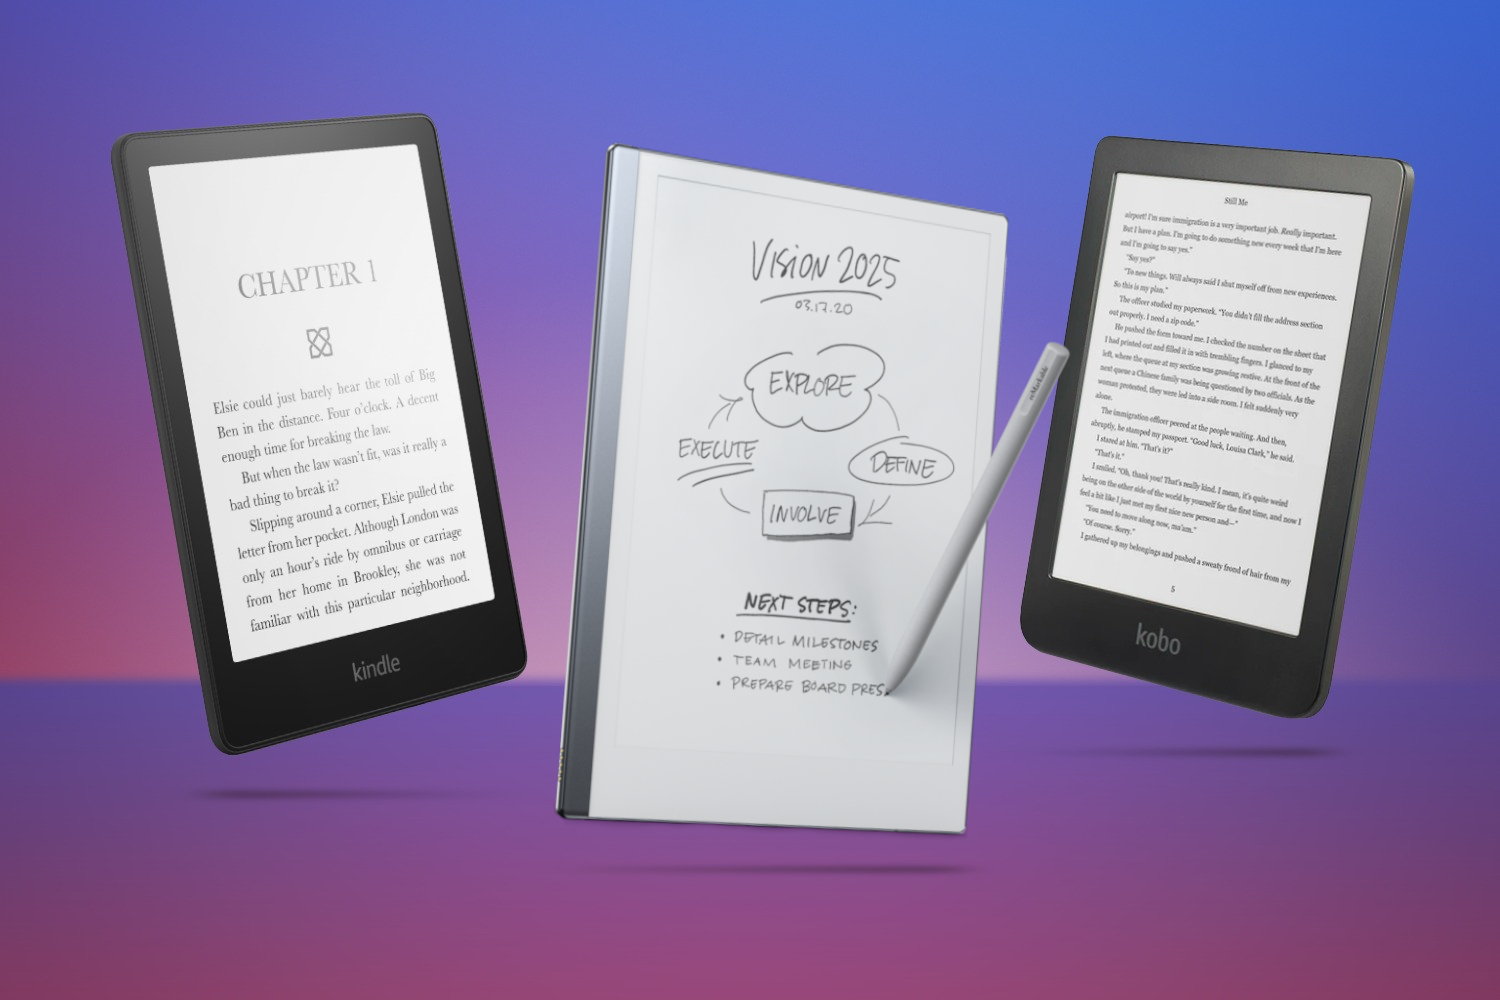  Kobo Elipsa Pack, eReader, 10.3” Glare Free Touchscreen, Mark Up eBooks, Pack Includes Kobo Elipsa, 1 Kobo Stylus & 1 SleepCover, Adjustable Brightness, Carta E Ink Technology